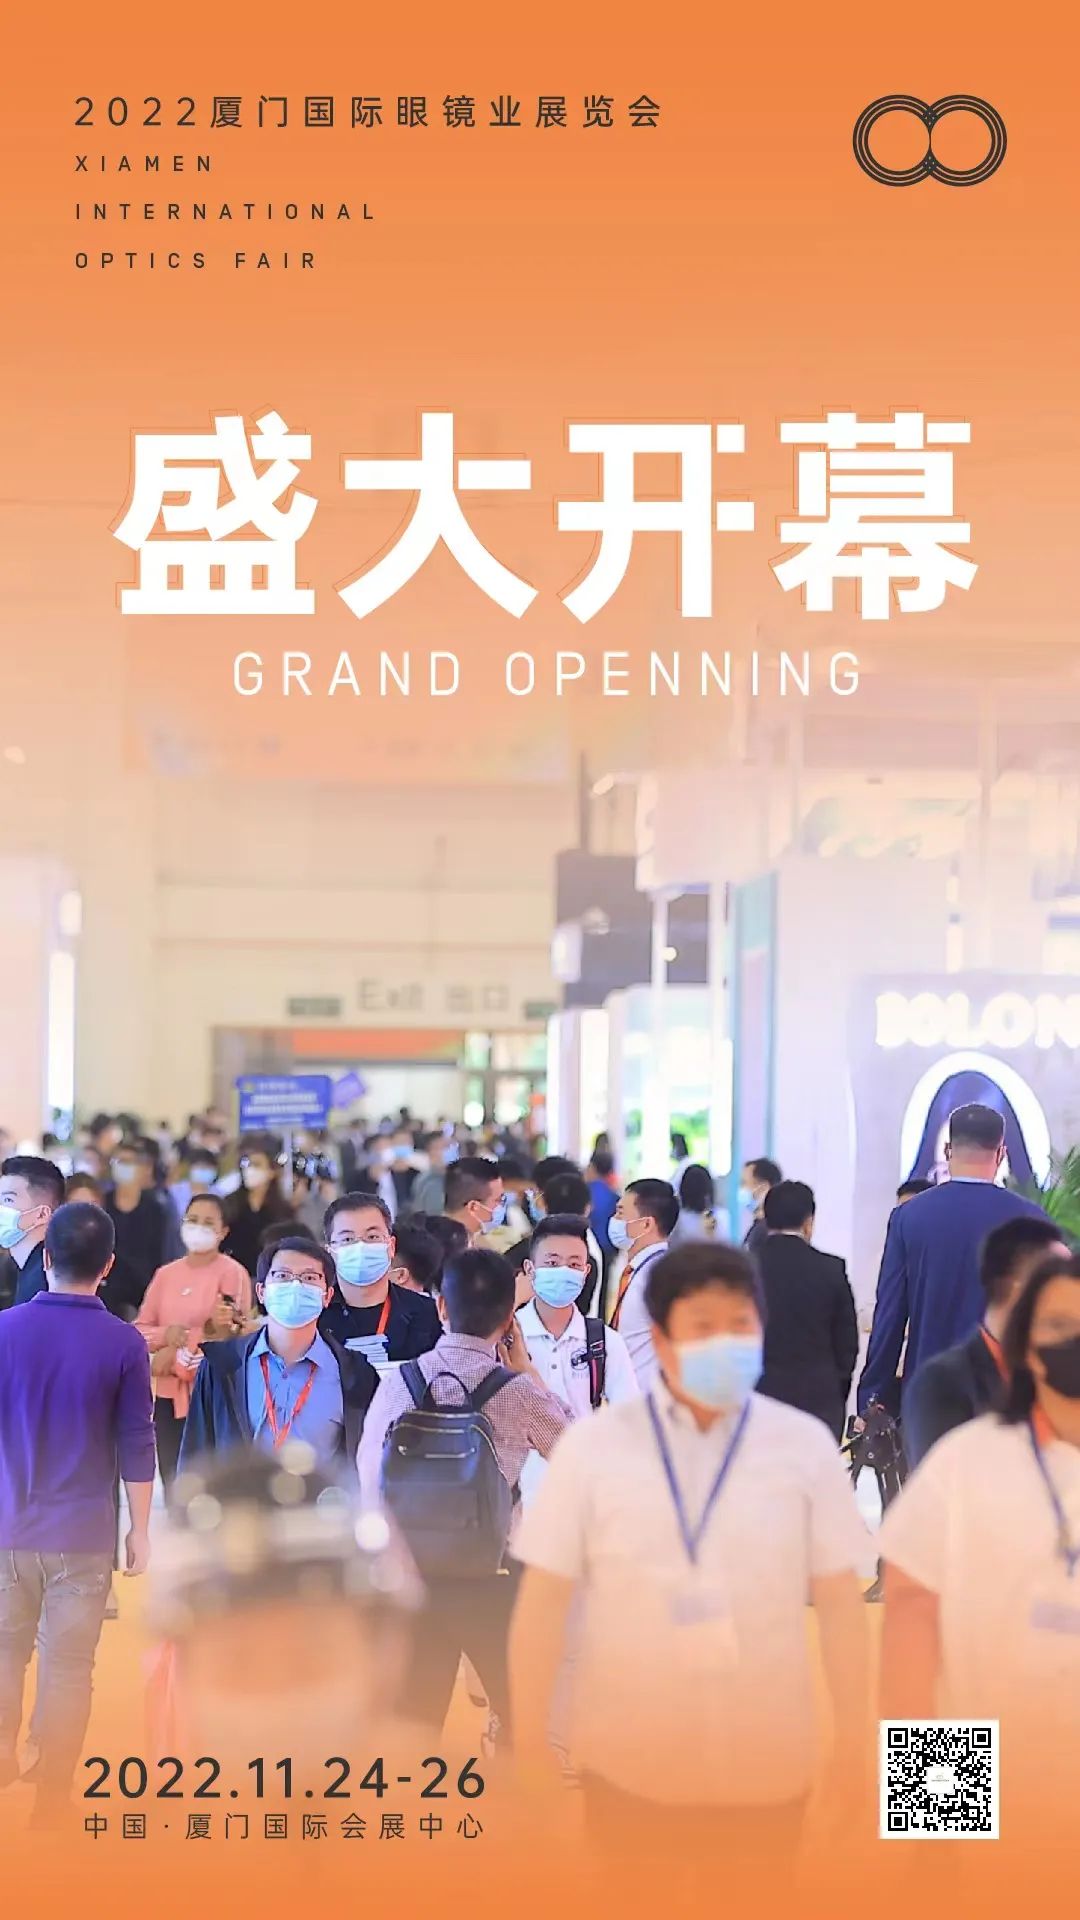 Xiamen International Optics Fair 2022 öppnar idag!